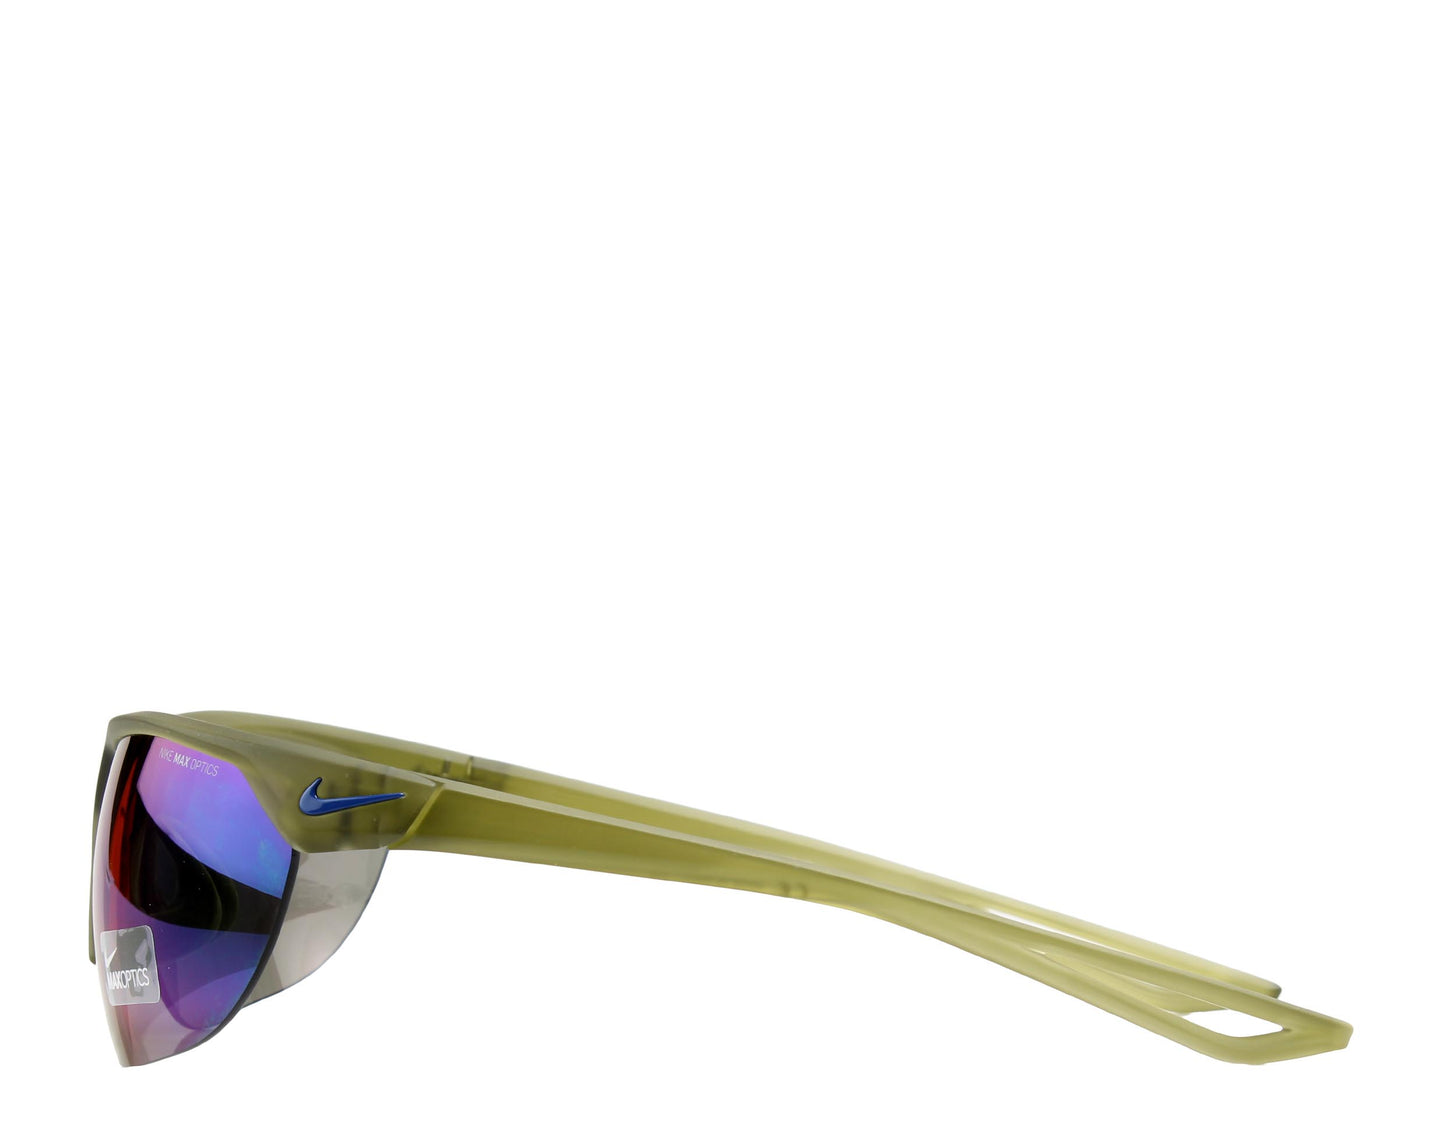 Nike Cross Trainer R Mt Green/Grey Green Flash Lens Sport Sunglasses EV1012-300